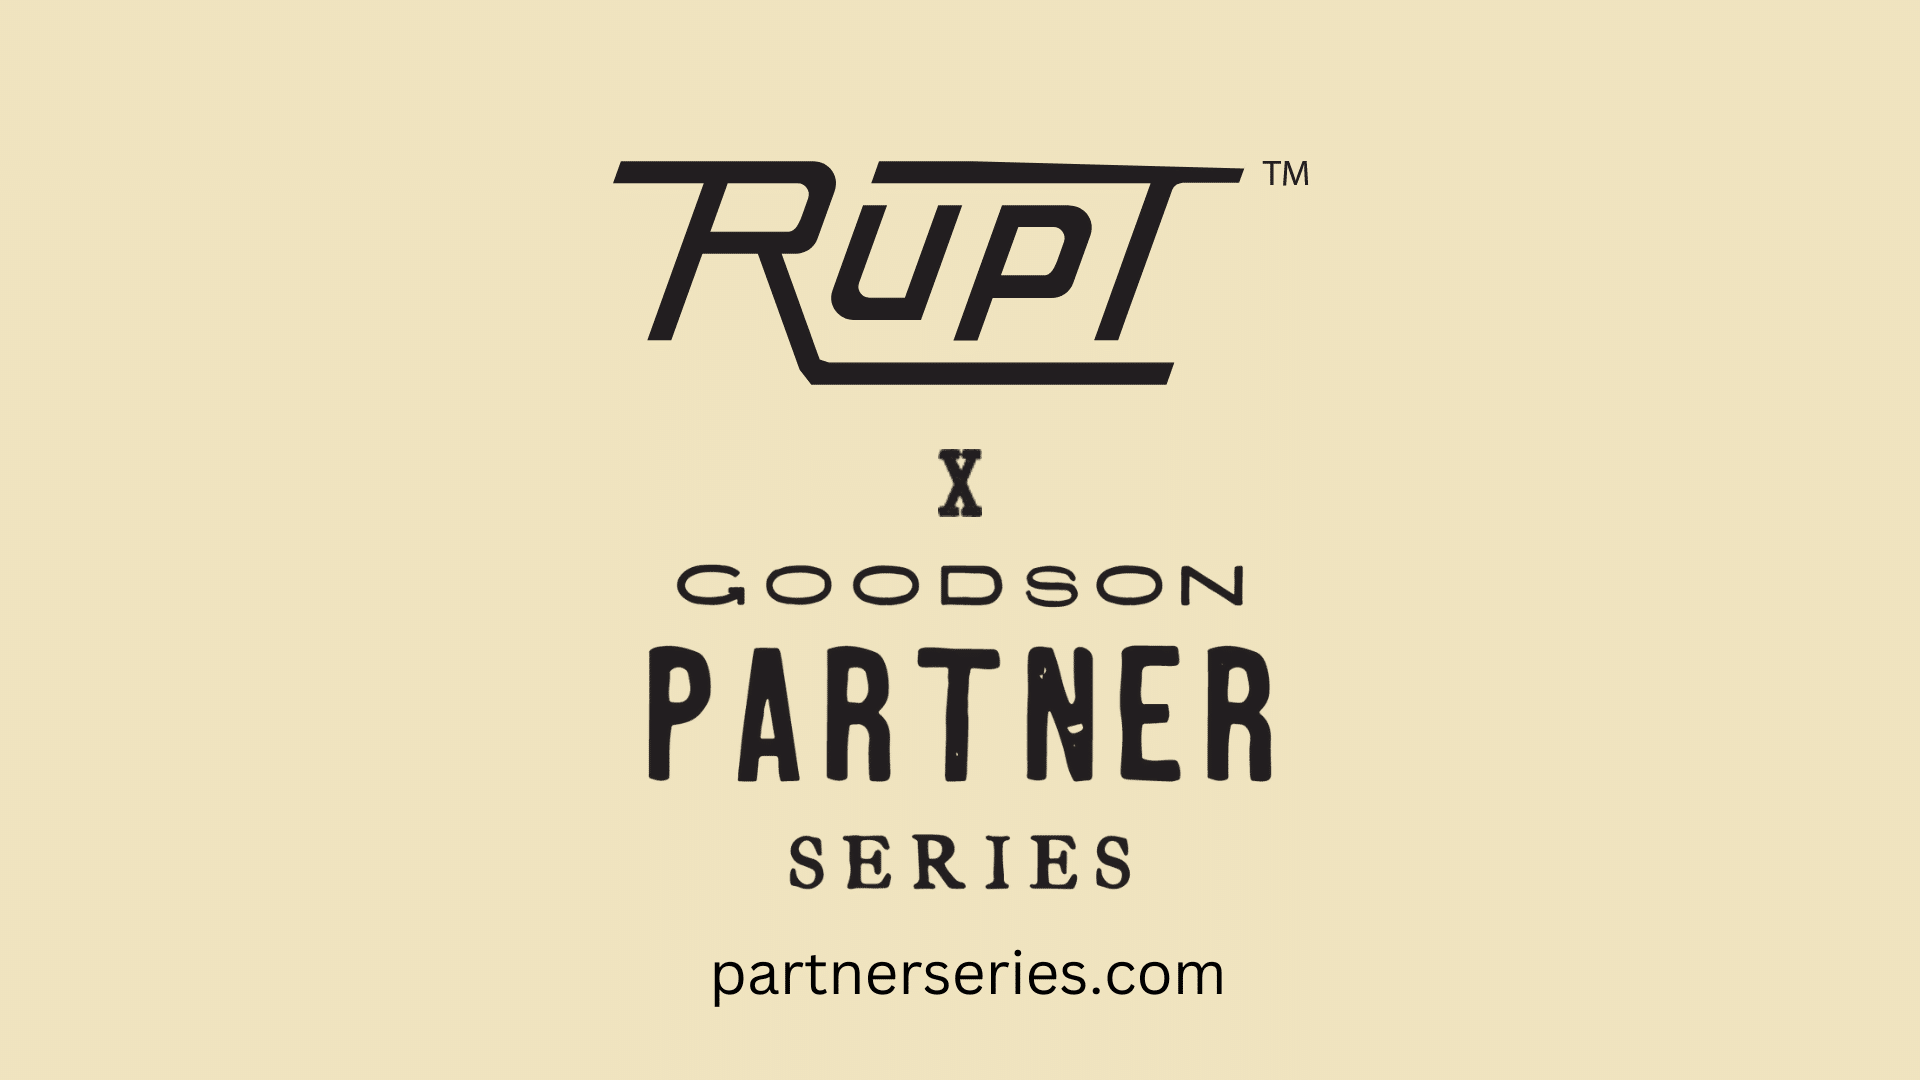 Rupt and goodson partner series webinar